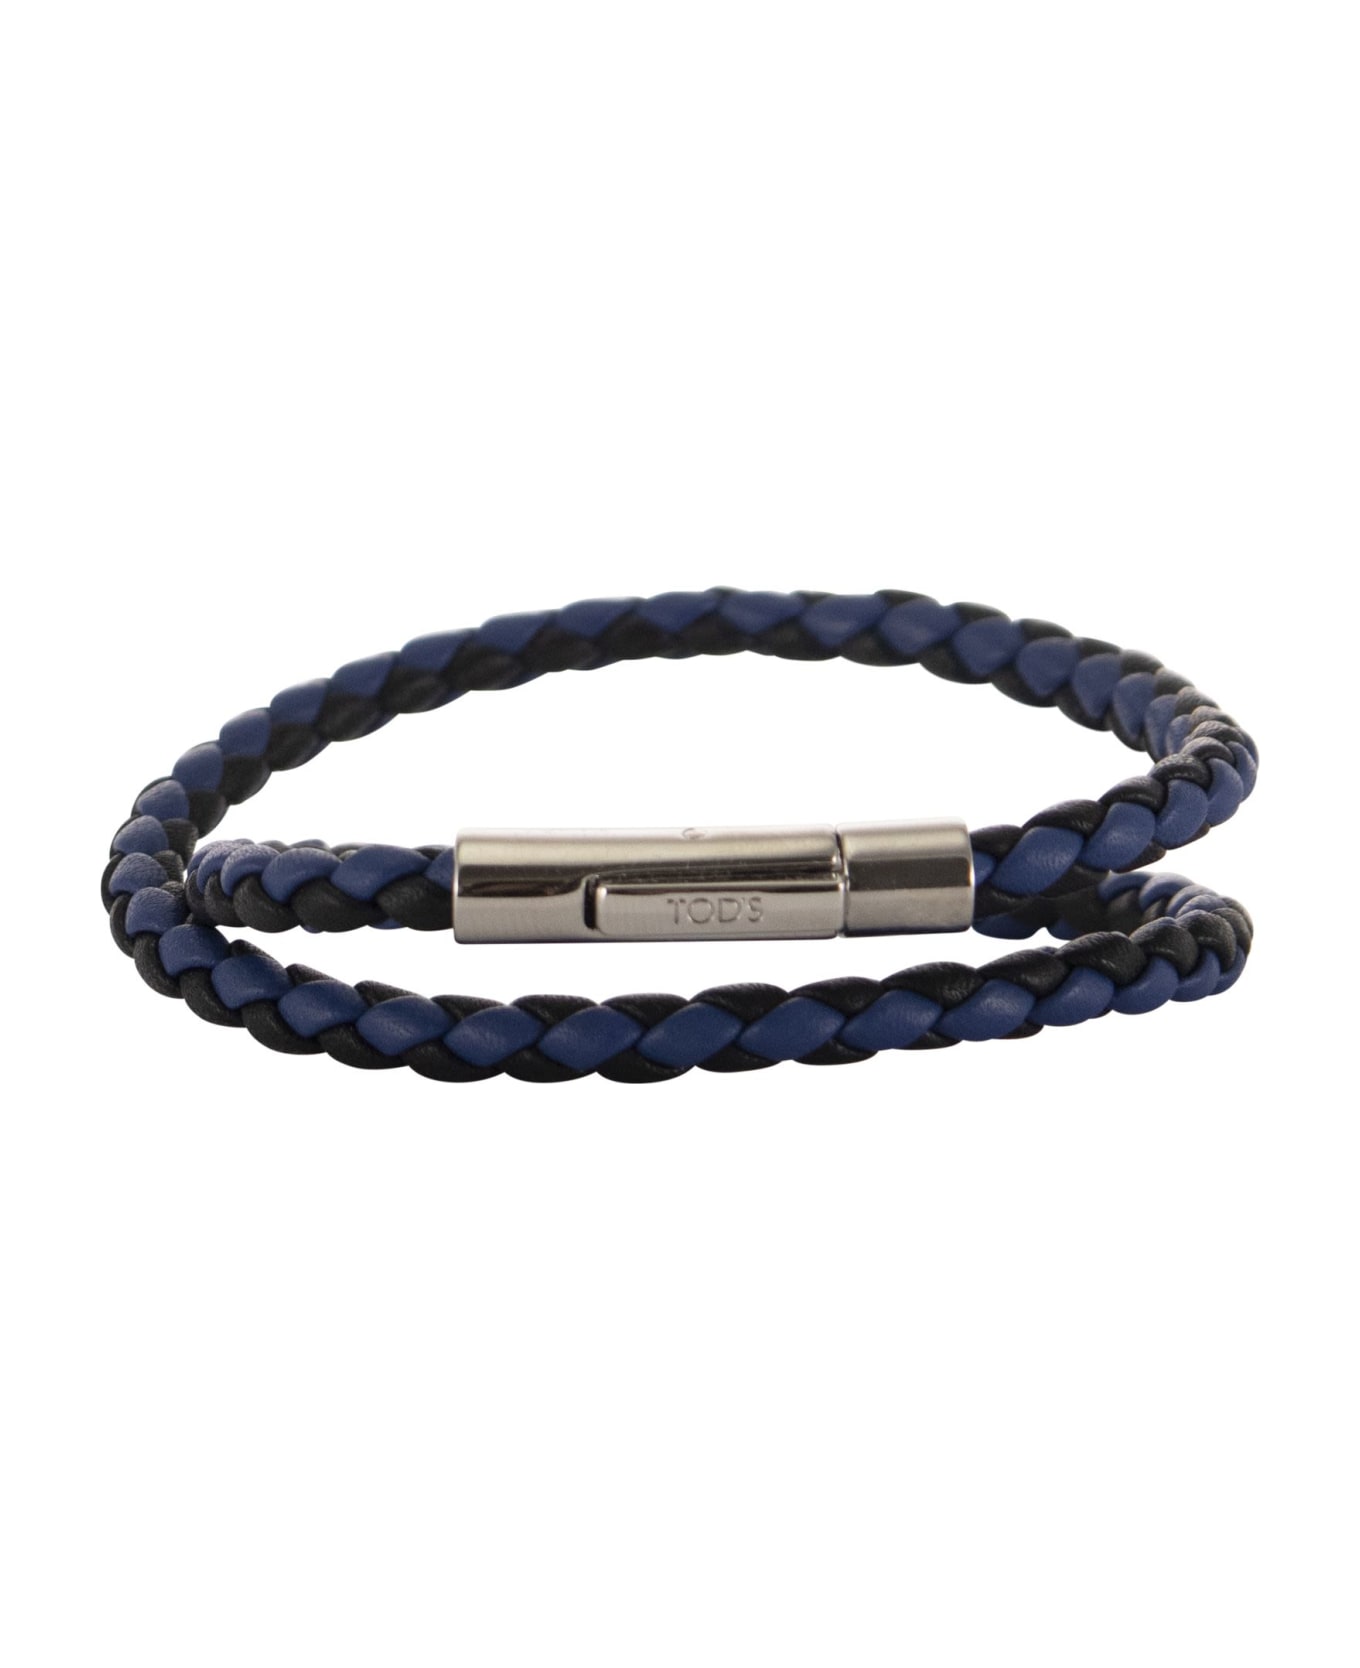 Tod's Mycolors Bracelet - Black/blue ブレスレット